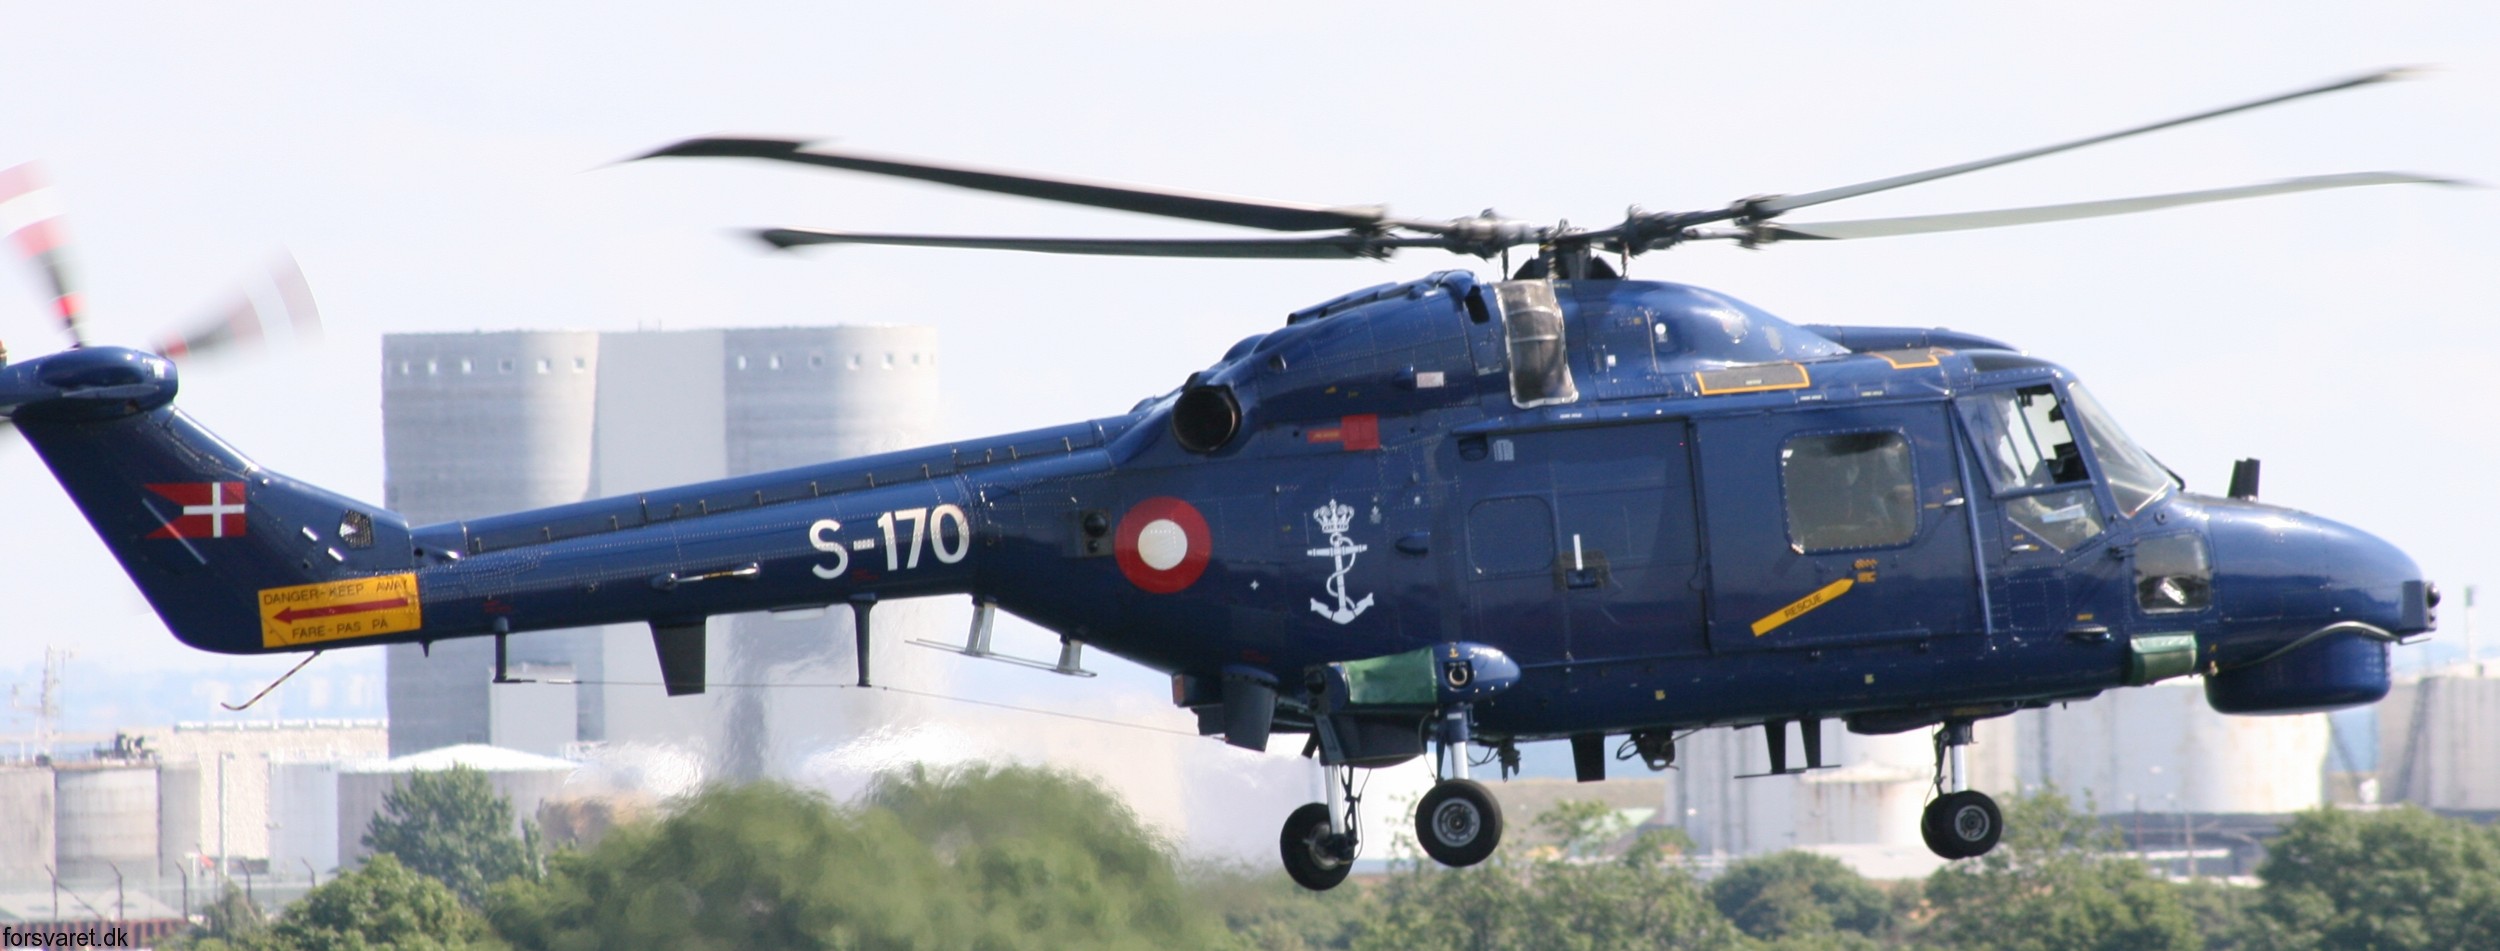 lynx mk.80 mk.90b helicopter westland royal danish navy air force kongelige danske marine flyvevabnet s-170 10